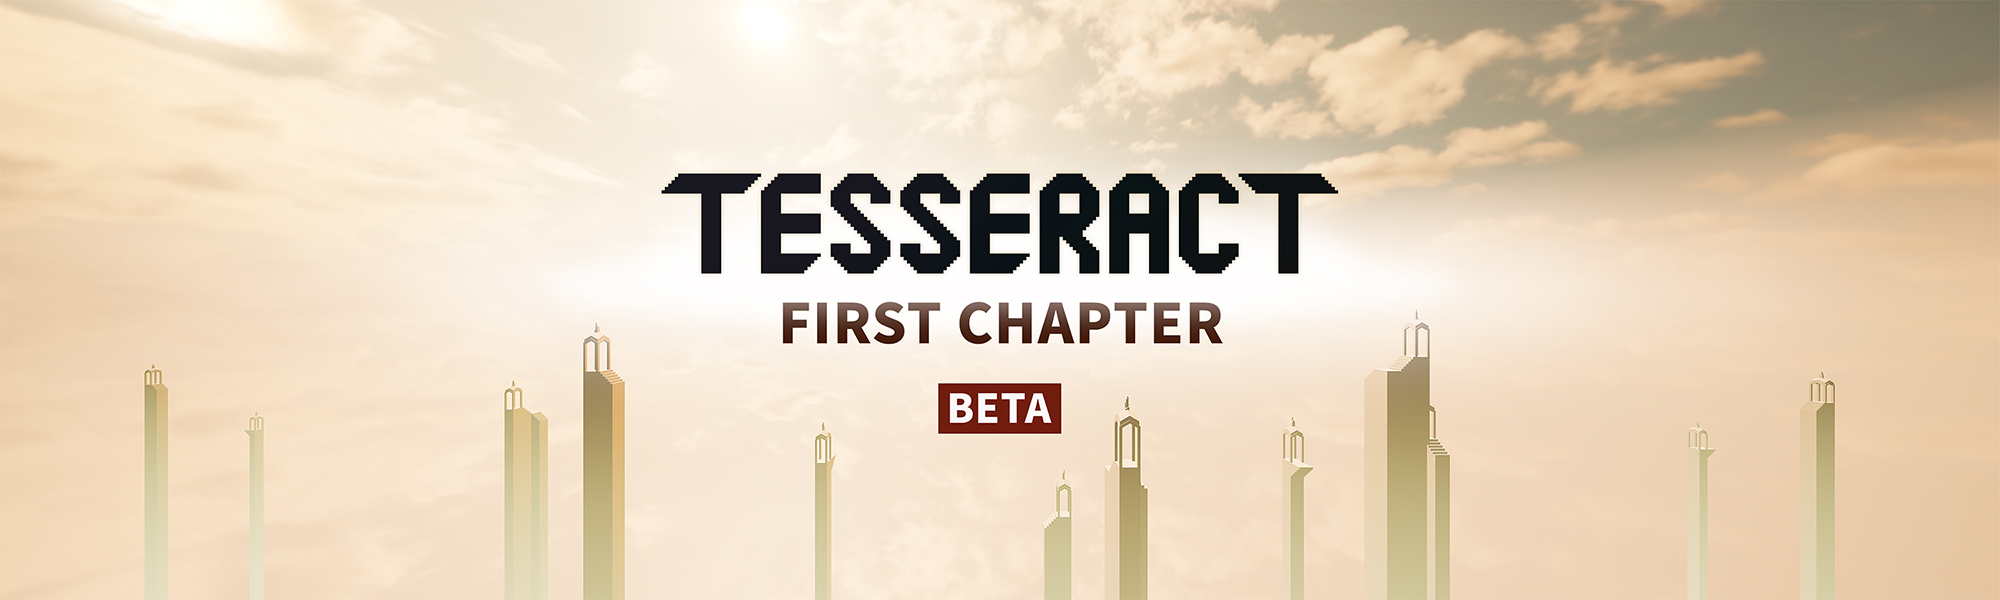 Tesseract - First Chapter - Beta